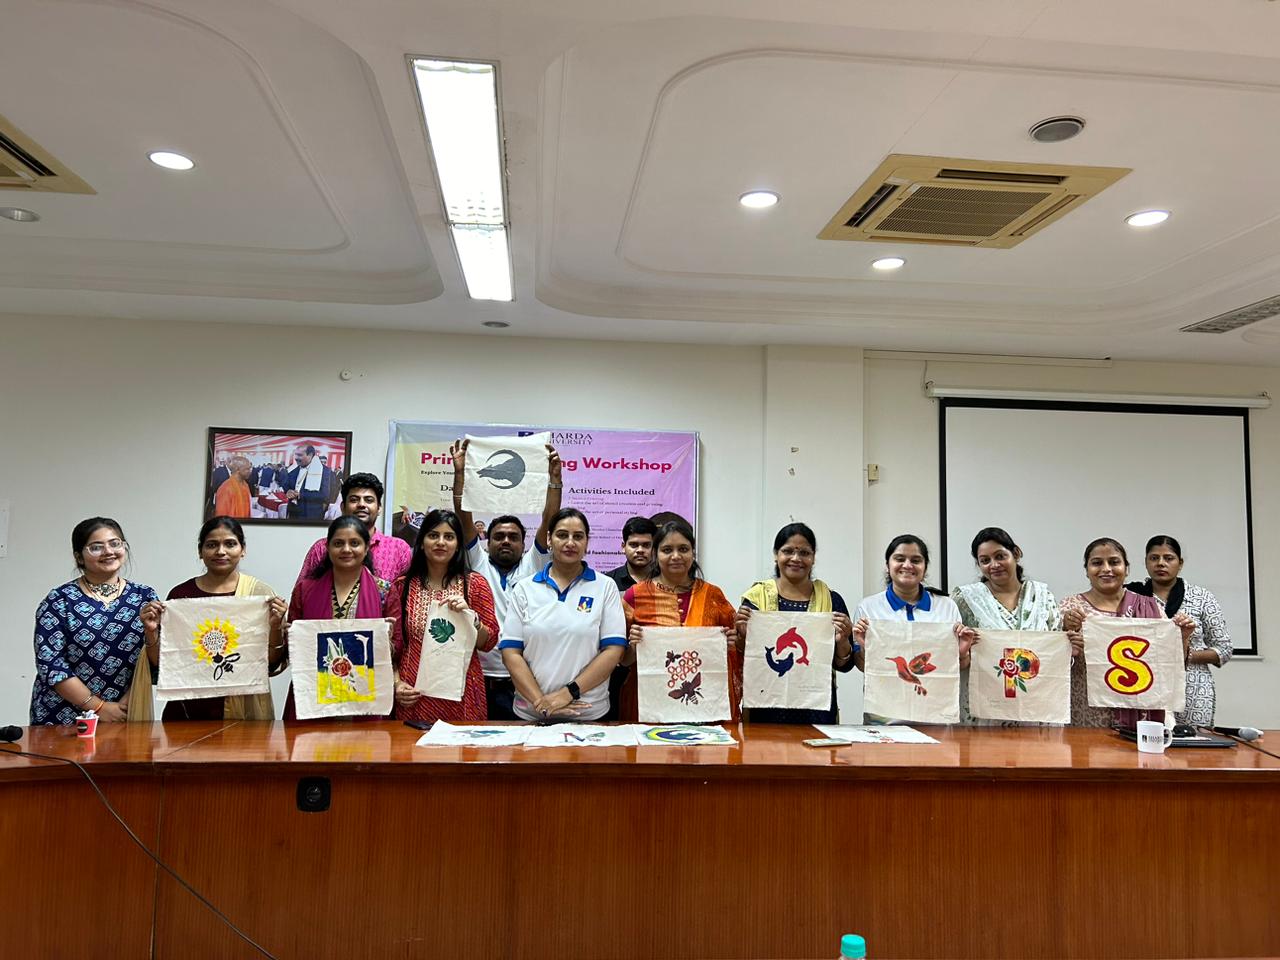 SSD organized an inspiring Printing & Styling Workshop 1 - Sharda University Agra